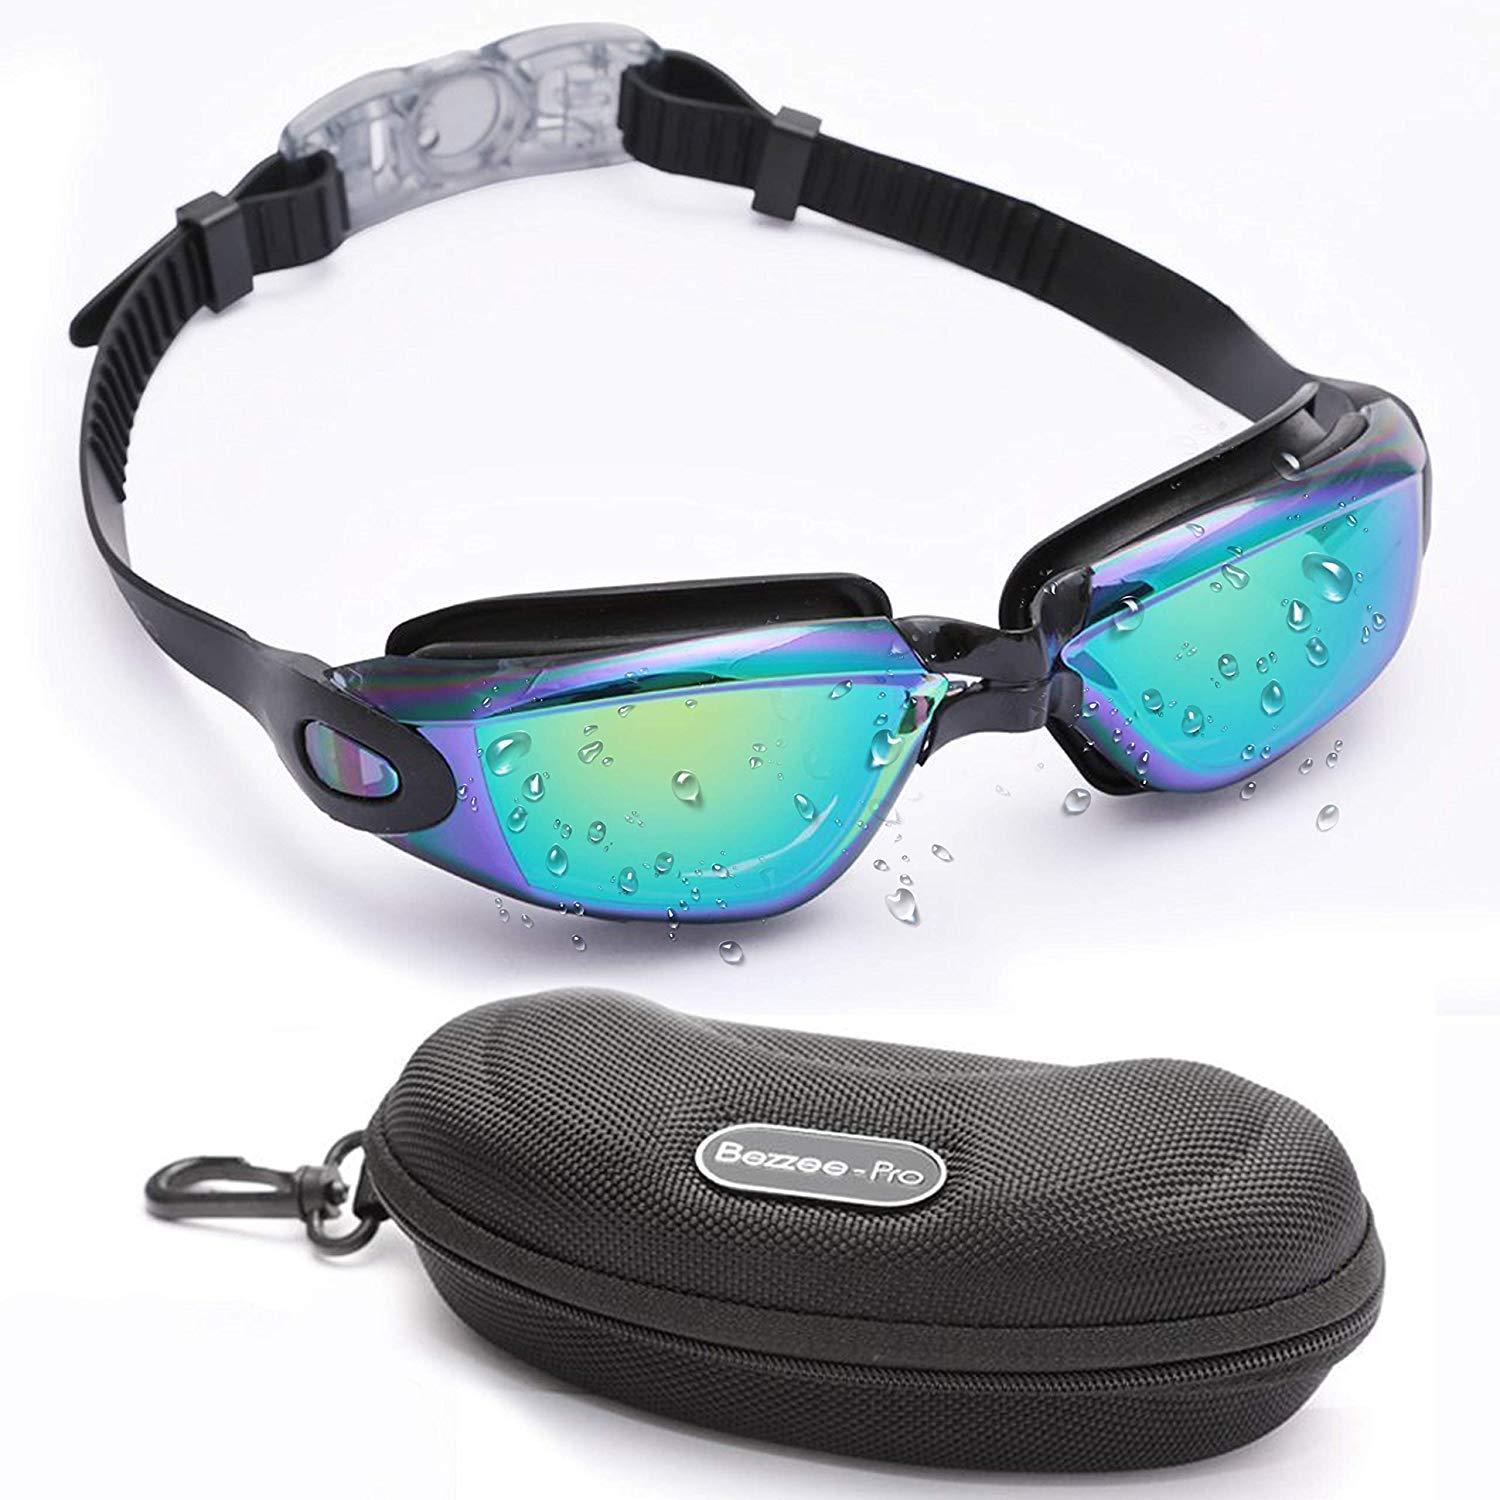 Bezzee Pro Swimming Goggles UV Protection & Anti Fog Swim Goggles with Storage 